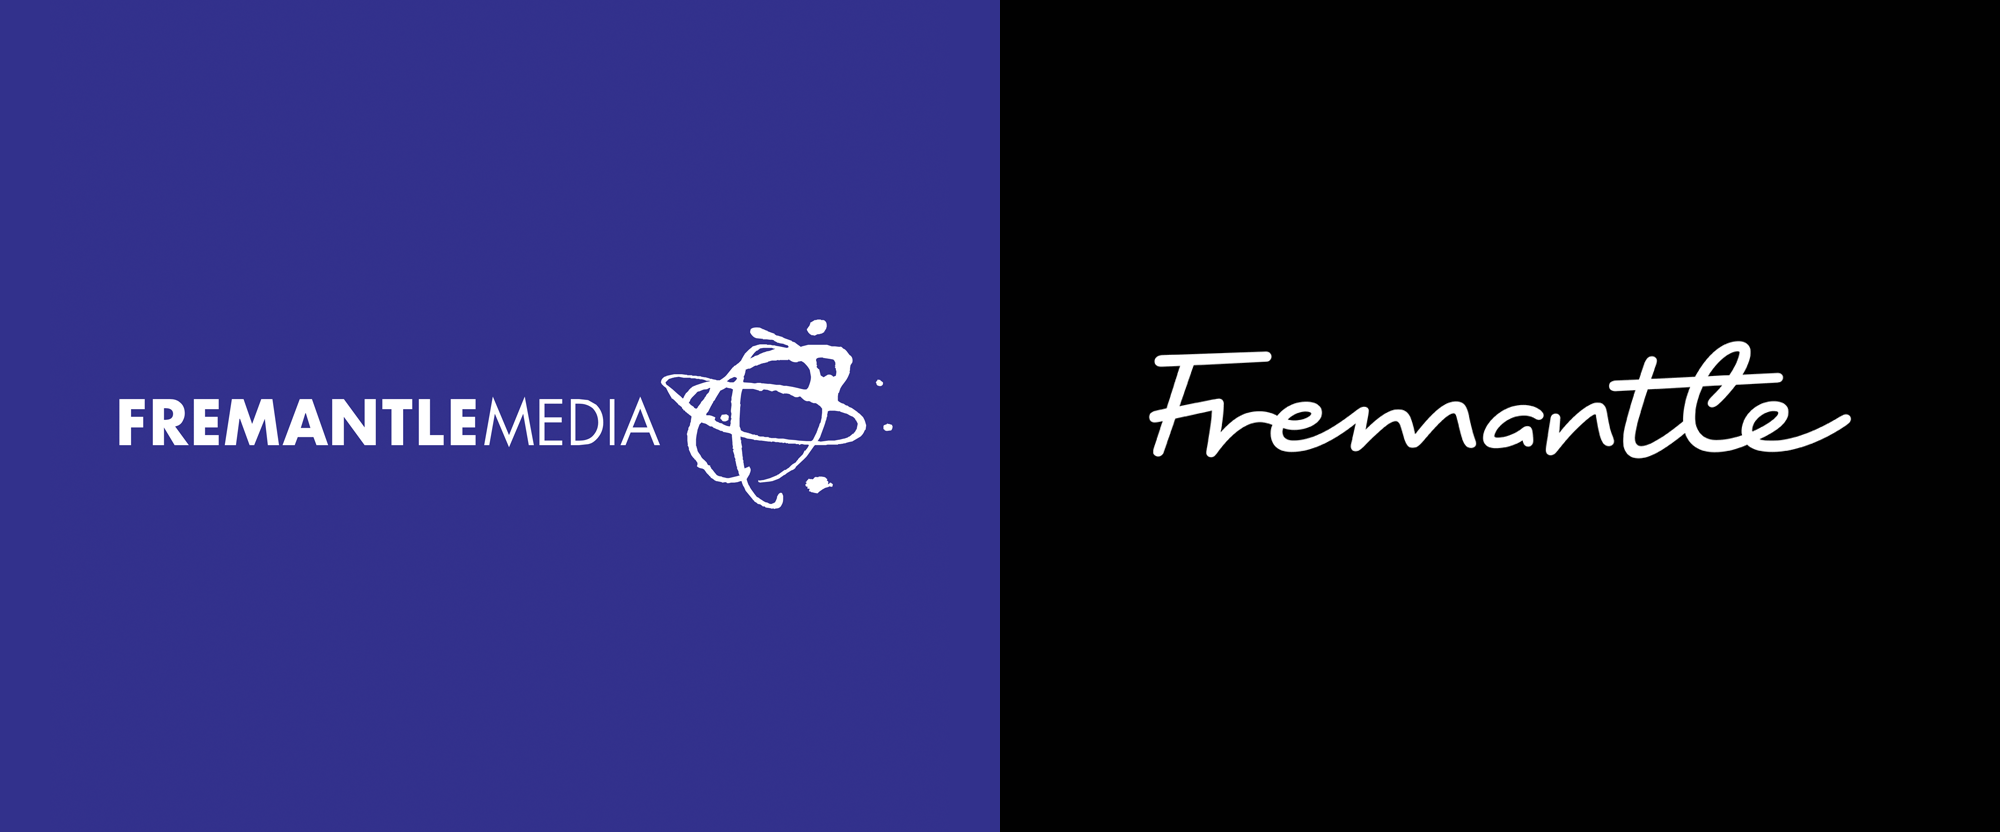 Fremantle Logo - Brand New: New Logo and Identity for Fremantle by venturethree